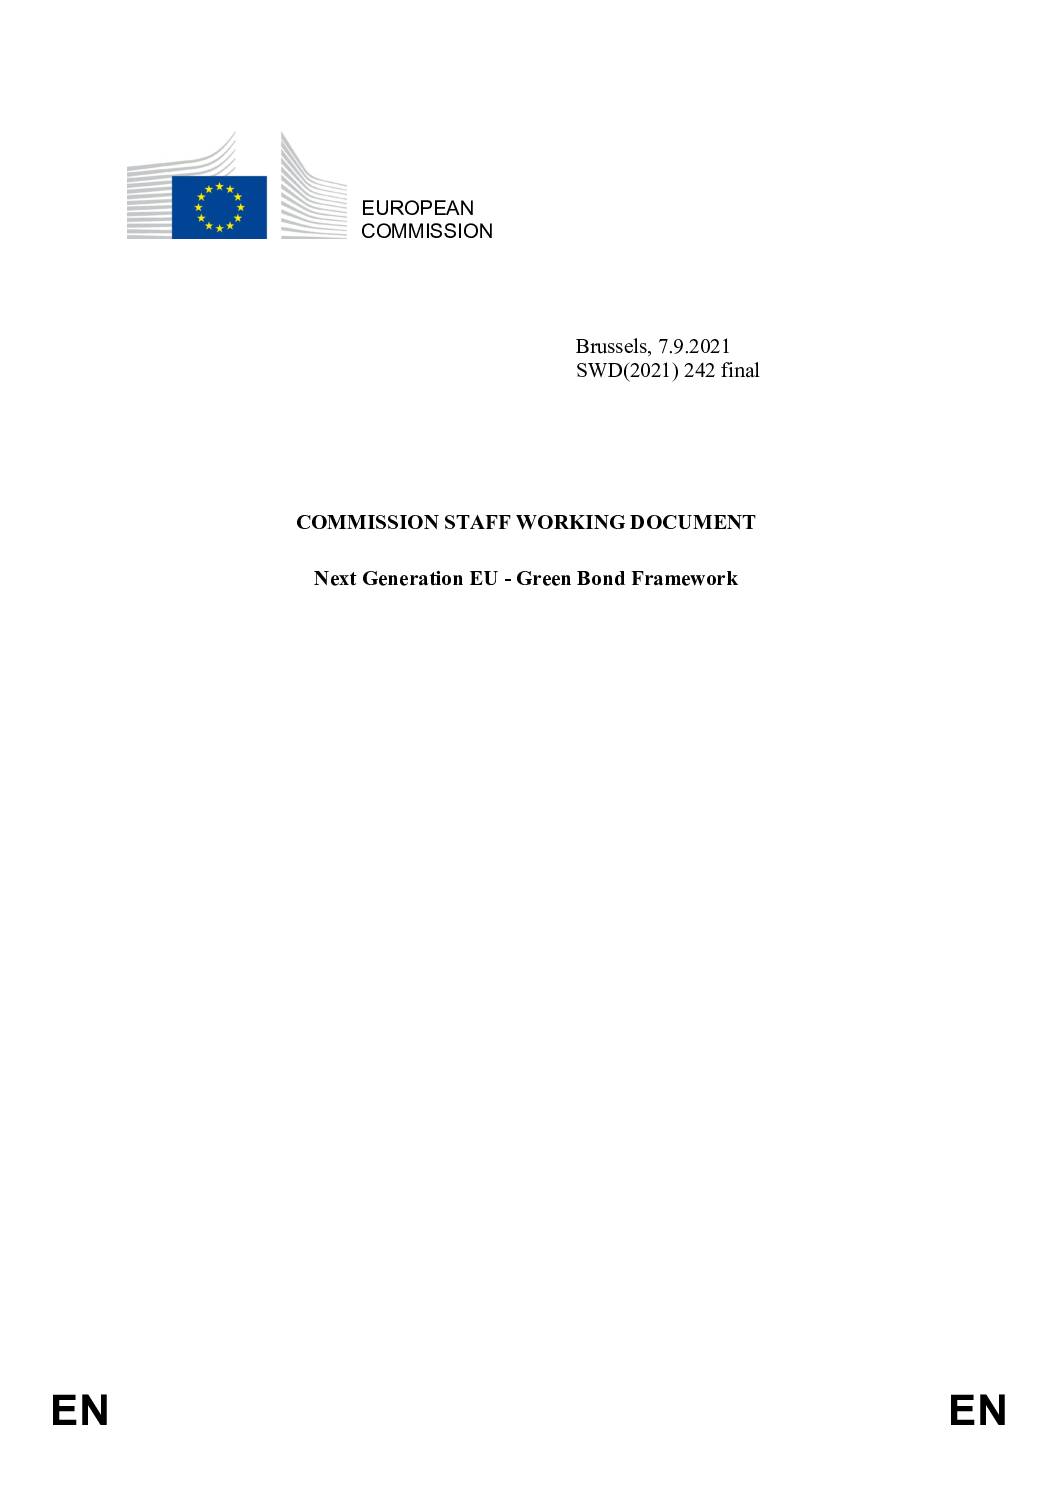 Commission Staff Working Document: Next Generation EU – Green Bond Framework